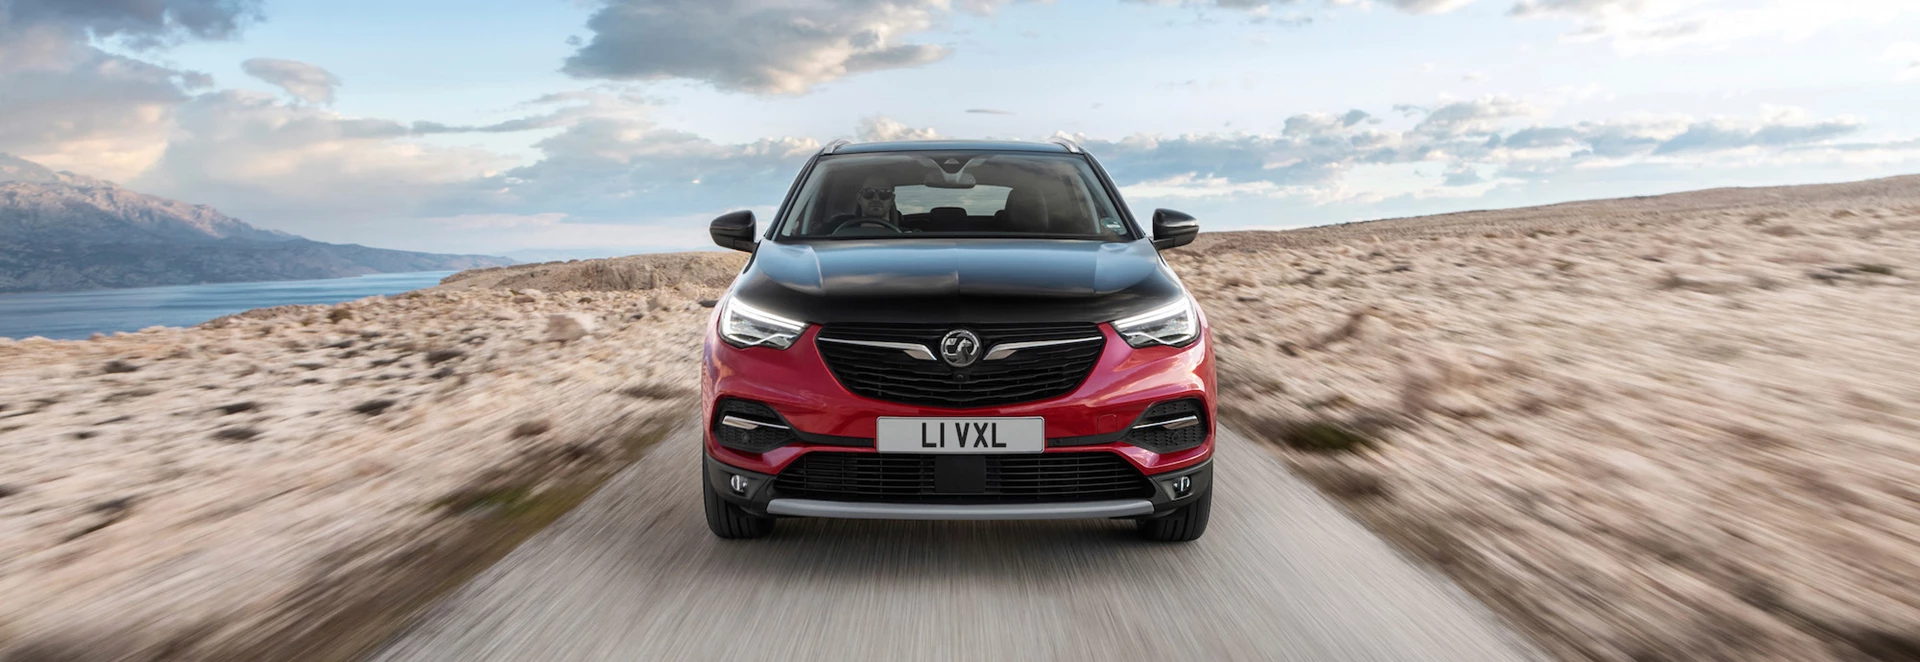 Vauxhall’s reveals new plug-in hybrid Grandland X